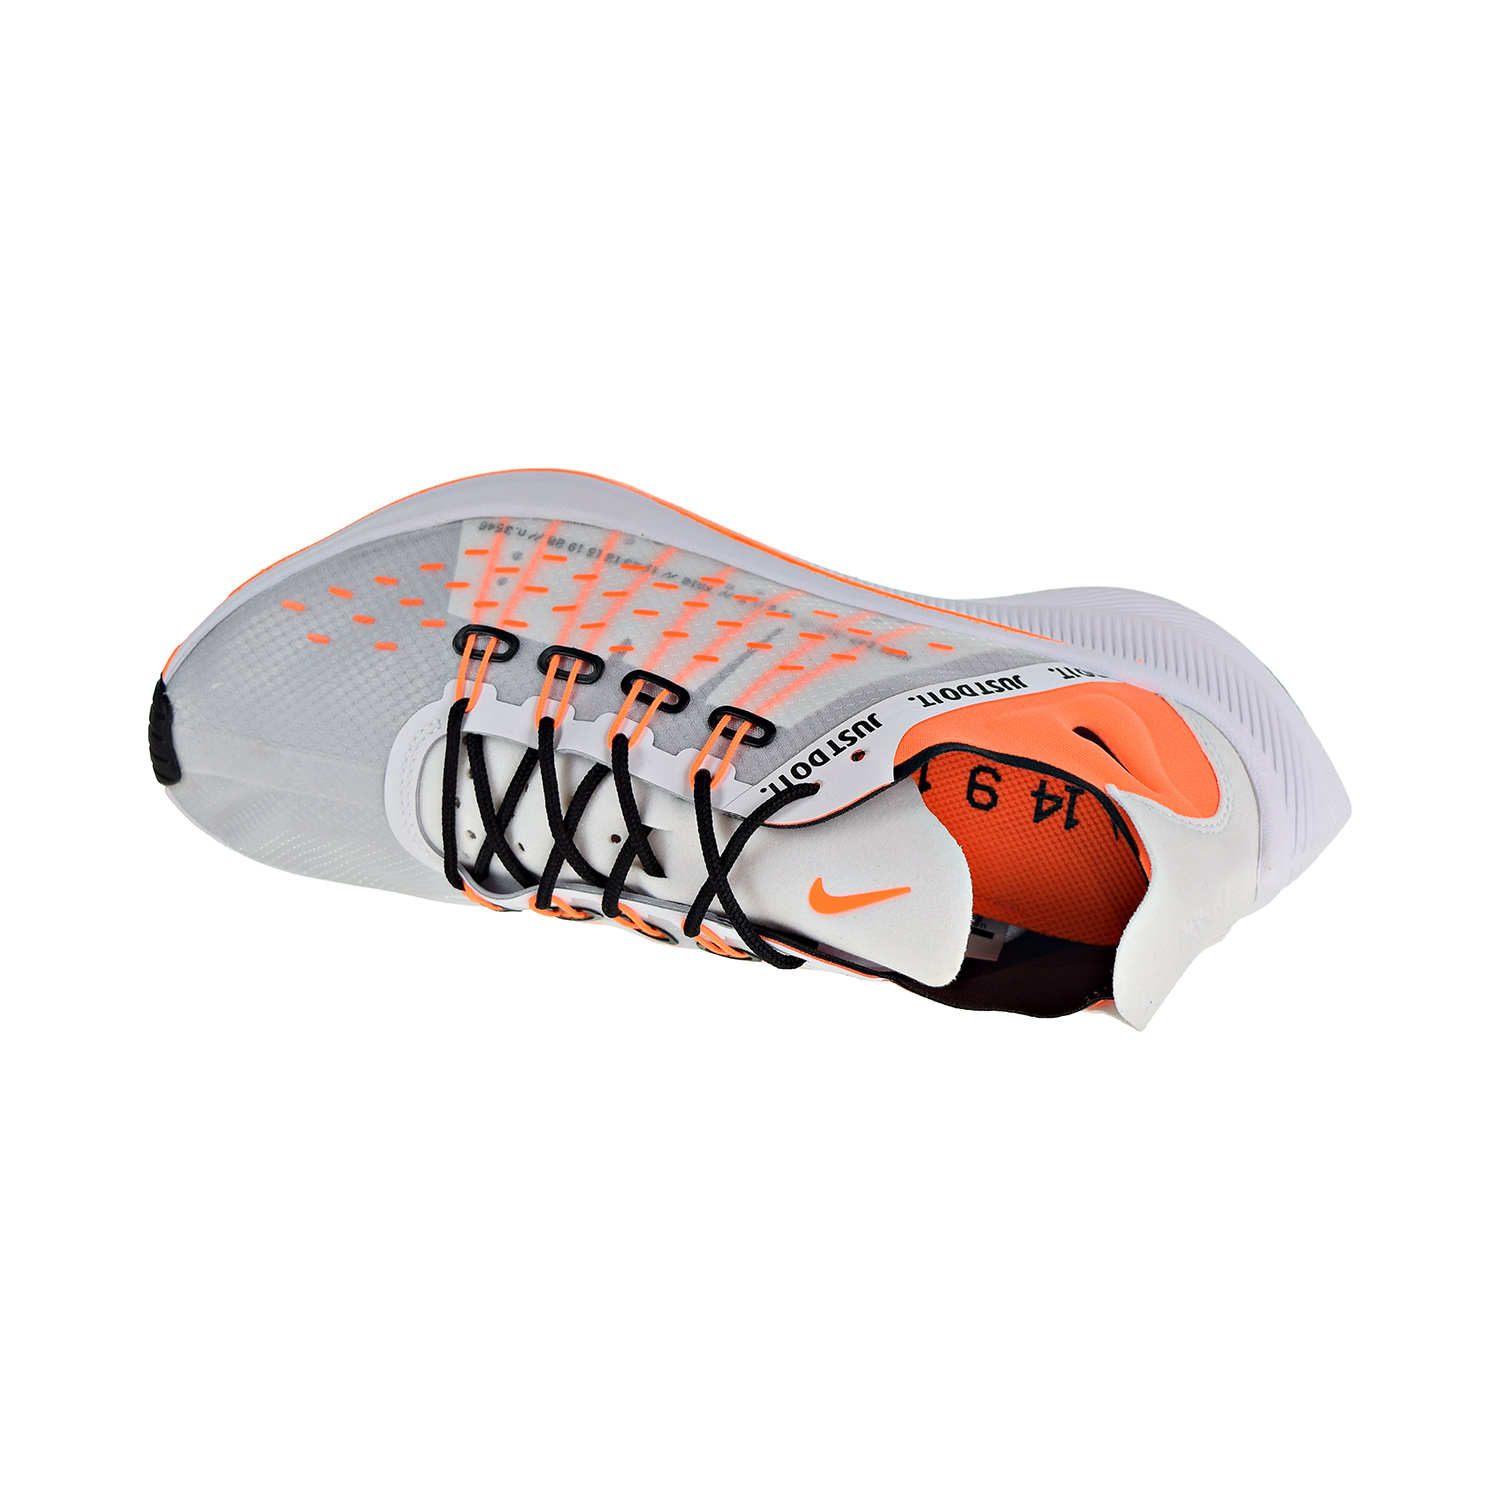 Nike EXP-X14 SE "Just Do It" Men's Shoes White/Total Orange/Black Wolf ao3095-100 - image 5 of 6